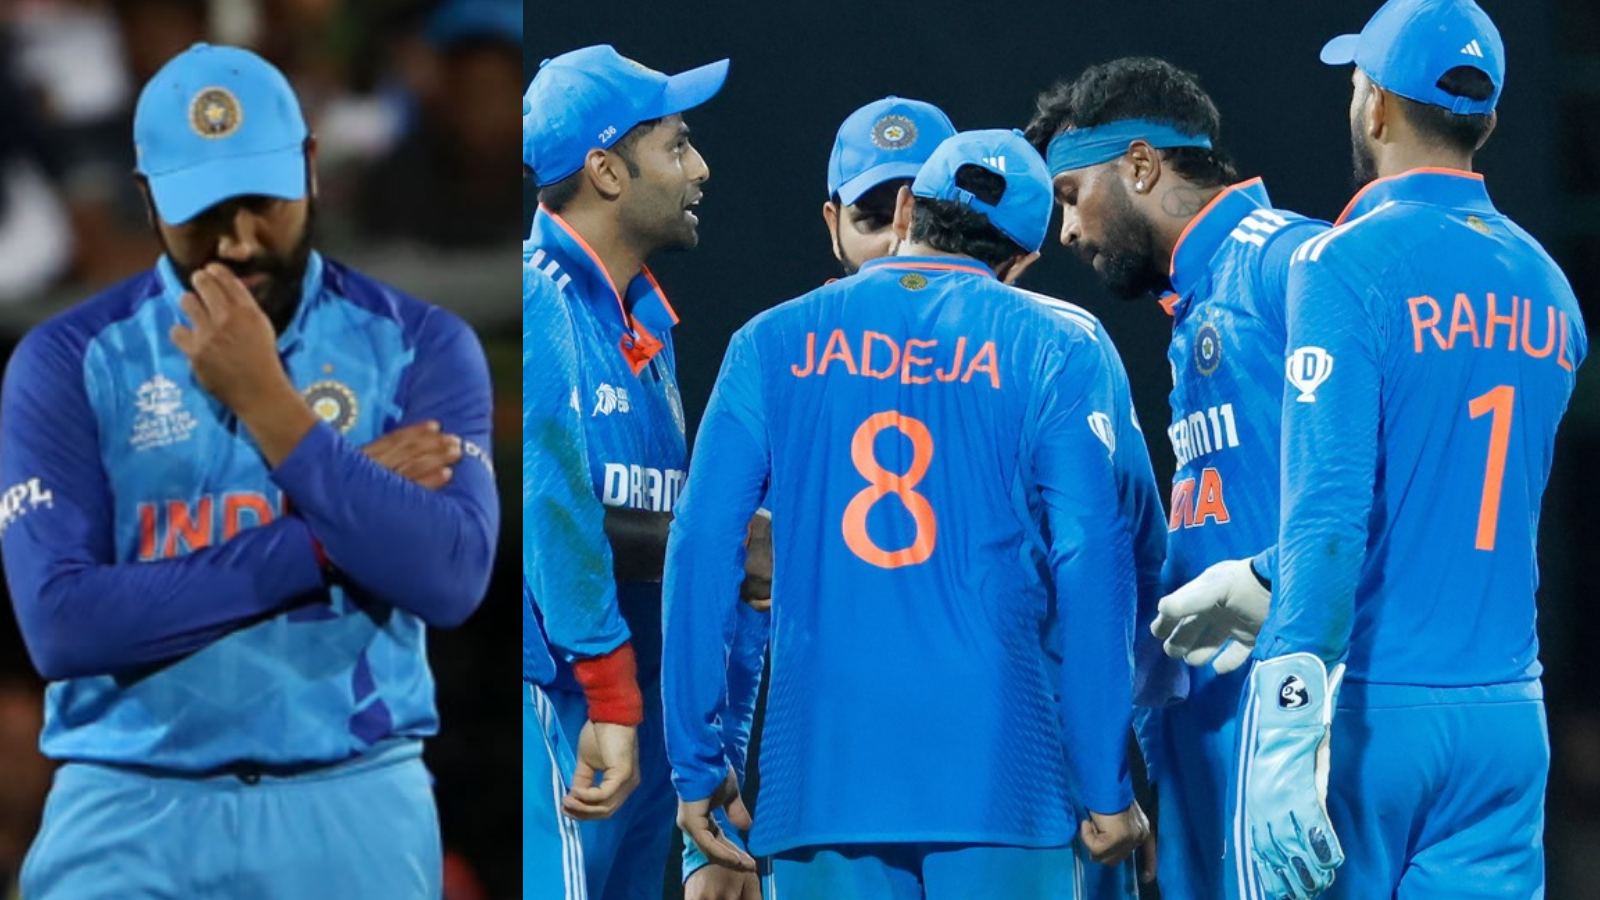 Ind New Cap, , Rohit Sharma: রোহিত শর্মা নয় বরং এই তরুণ তুর্কির উপরেই দেওয়া হবে T20 বিশ্বকাপ দলের দায়িত্ব !!